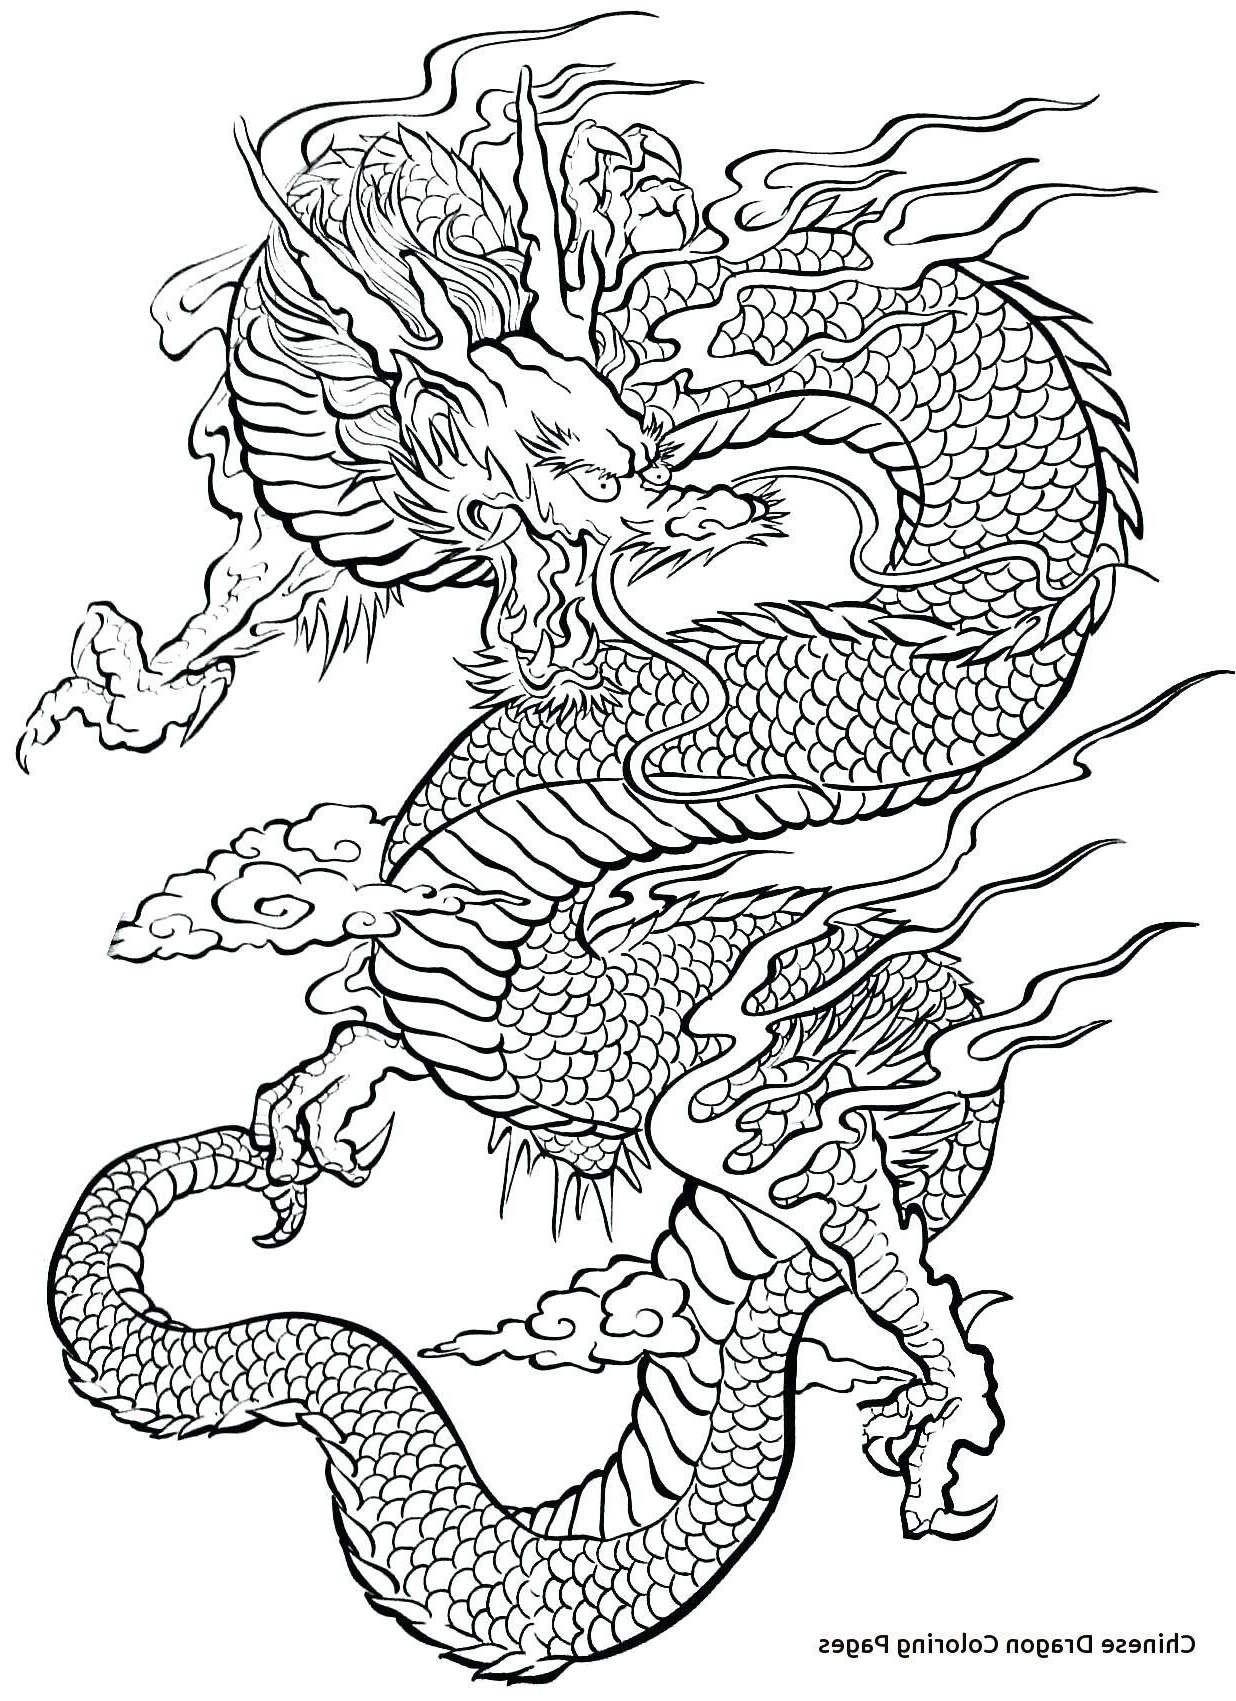 meilleur coloriage pokemon type dragon in coloriage mandala dragon nouveau en ligne chinese dragon coloring